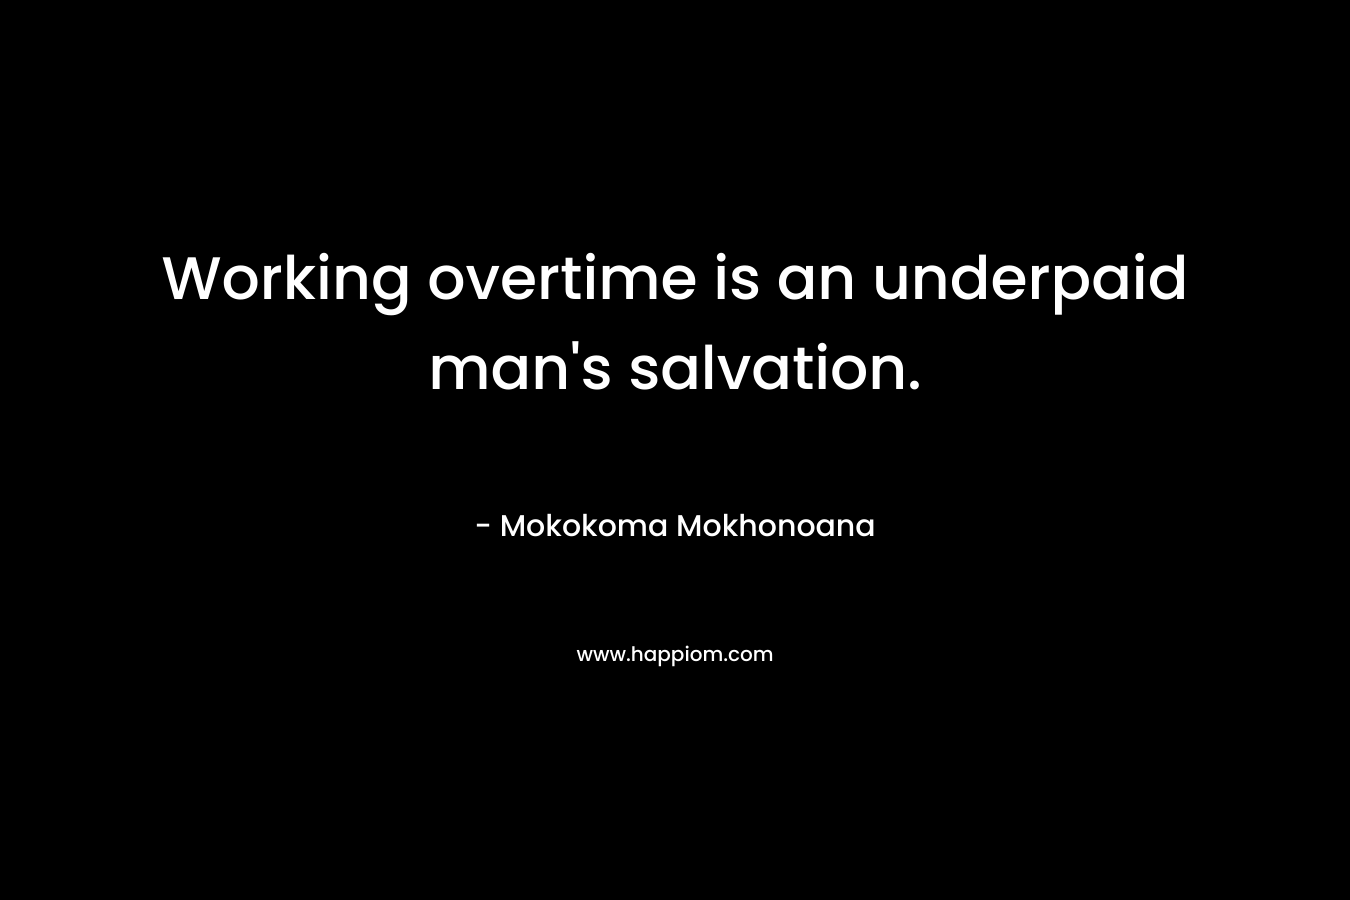 Working overtime is an underpaid man’s salvation. – Mokokoma Mokhonoana